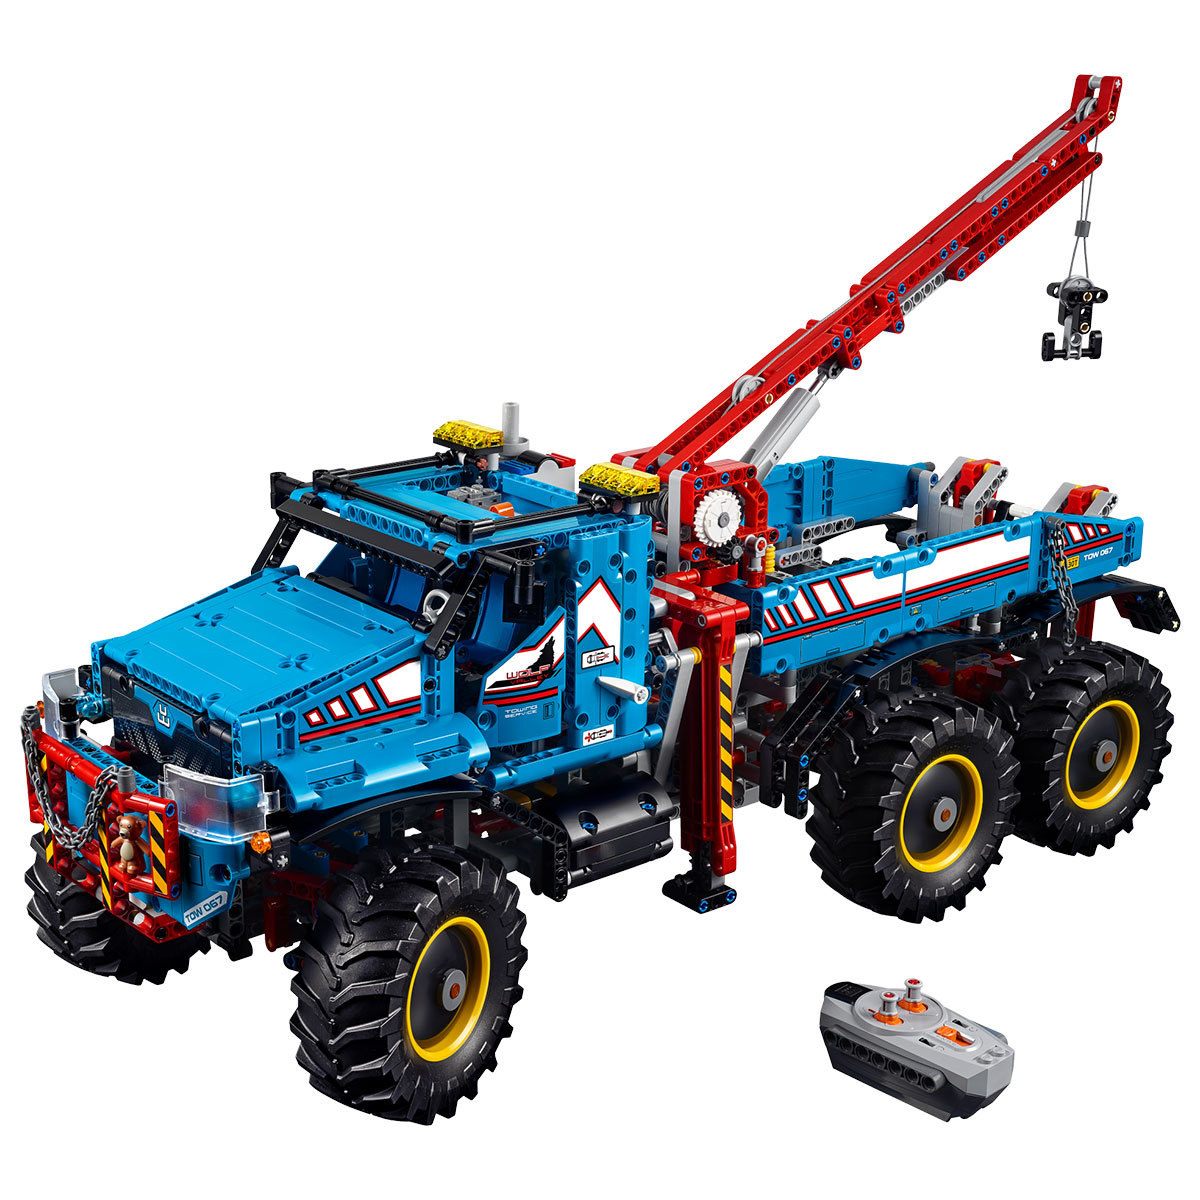 LEGO Technic 6x6 All Terrain Tow Truck + Power Functions - Model 42070 (11-16 Years)